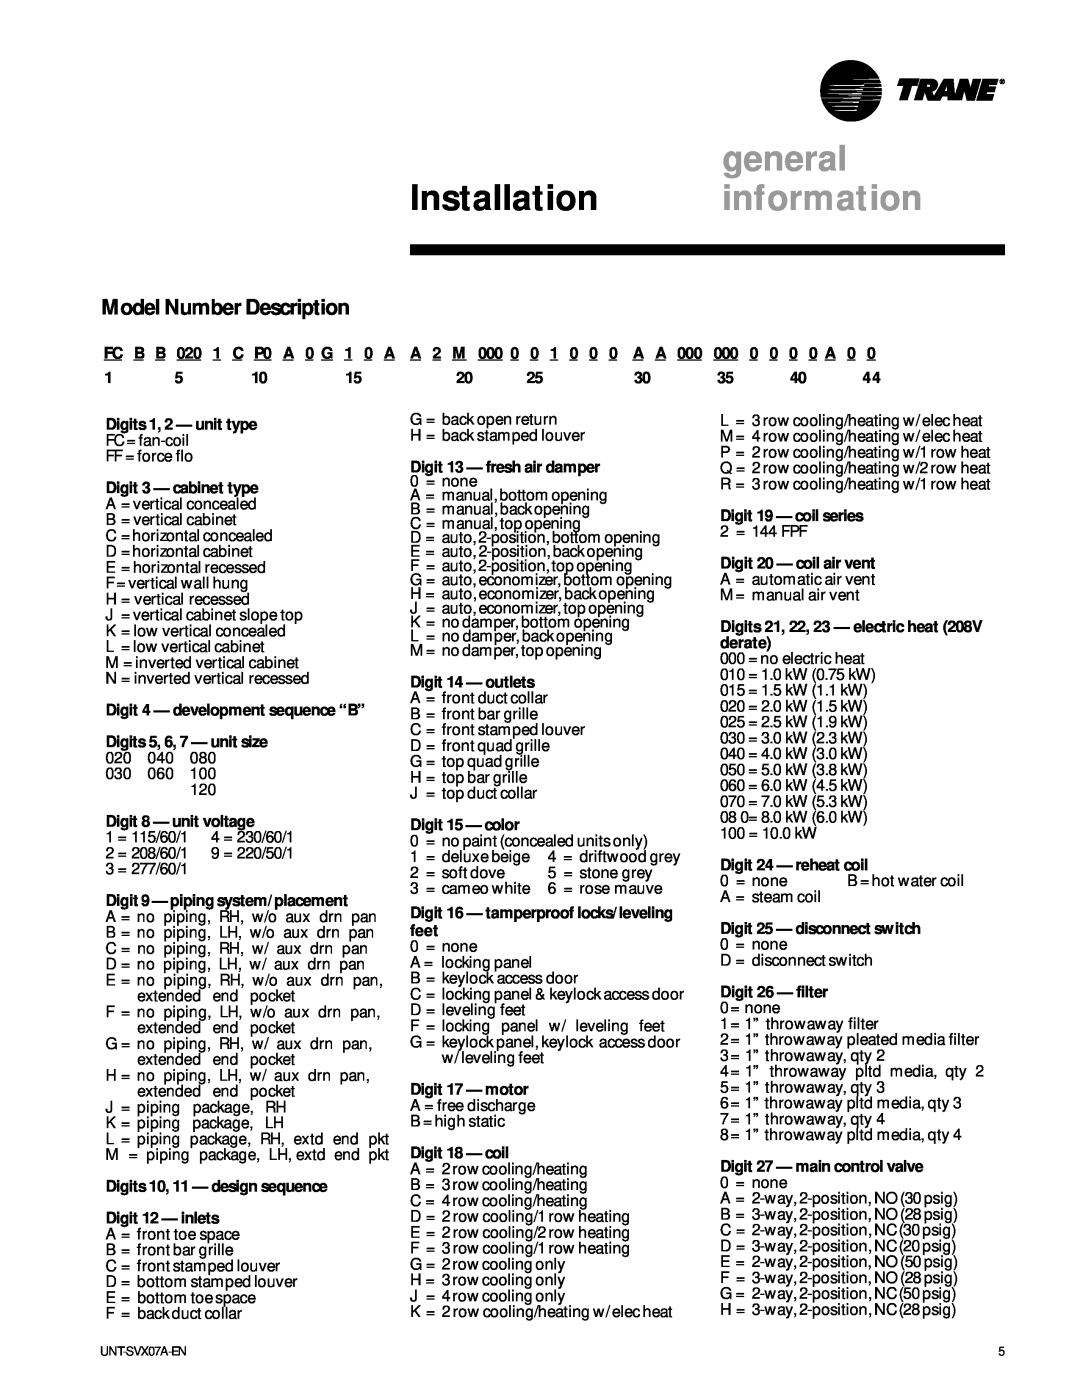 Trane UniTrane Fan-Coil & Force Flo Air Conditioners general, Installation information, Model Number Description, P0 A 